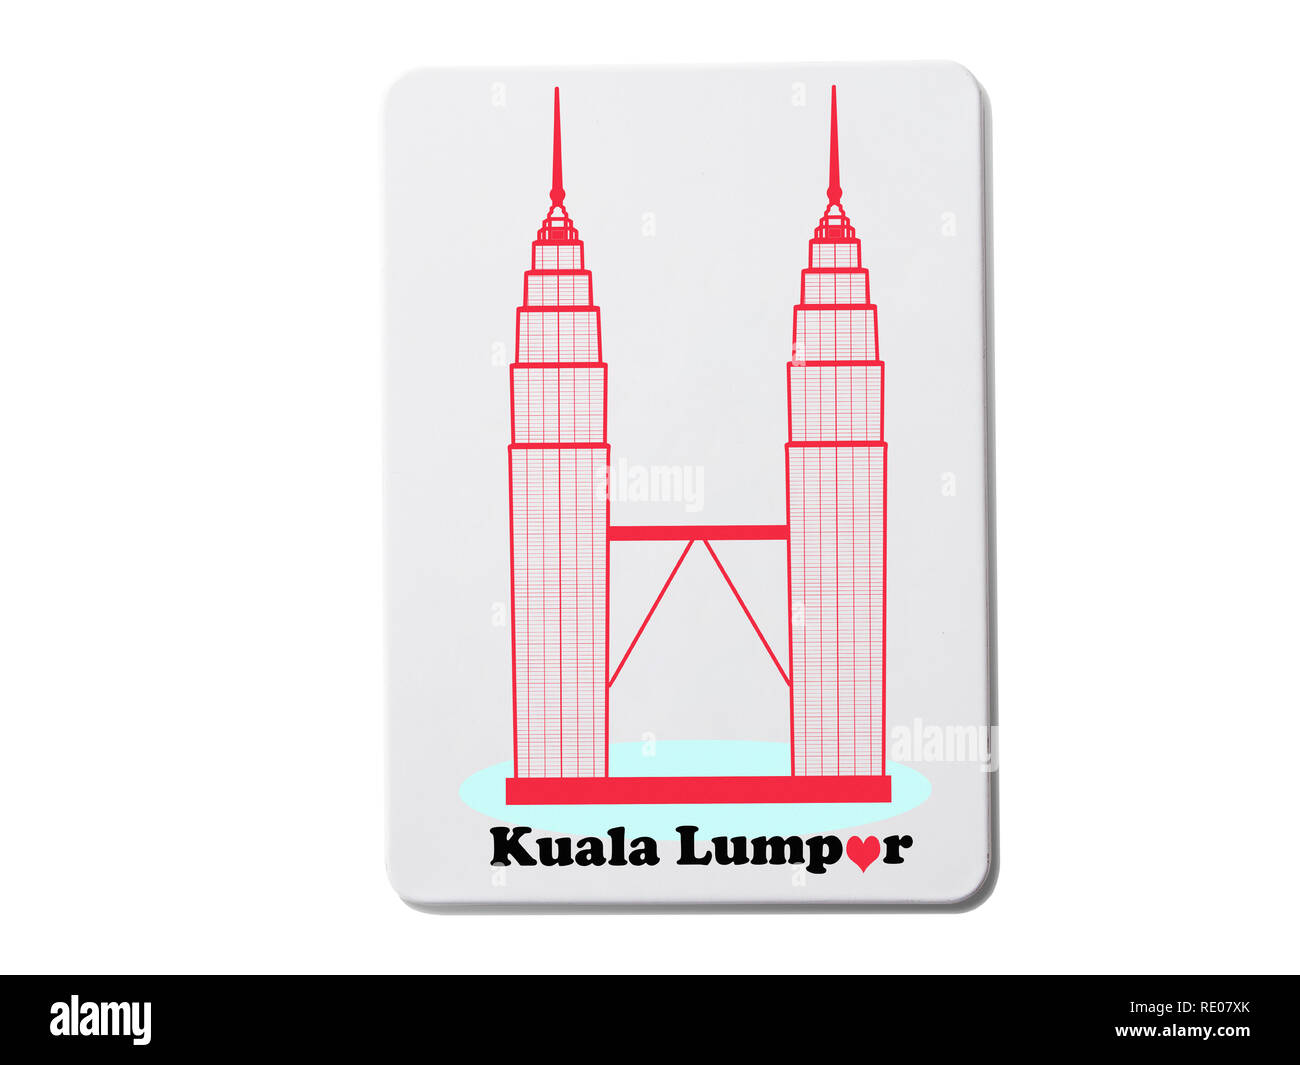 Kuala Lumpur (Malaysia) souvenir refrigerator magnet isolated on white background Stock Photo